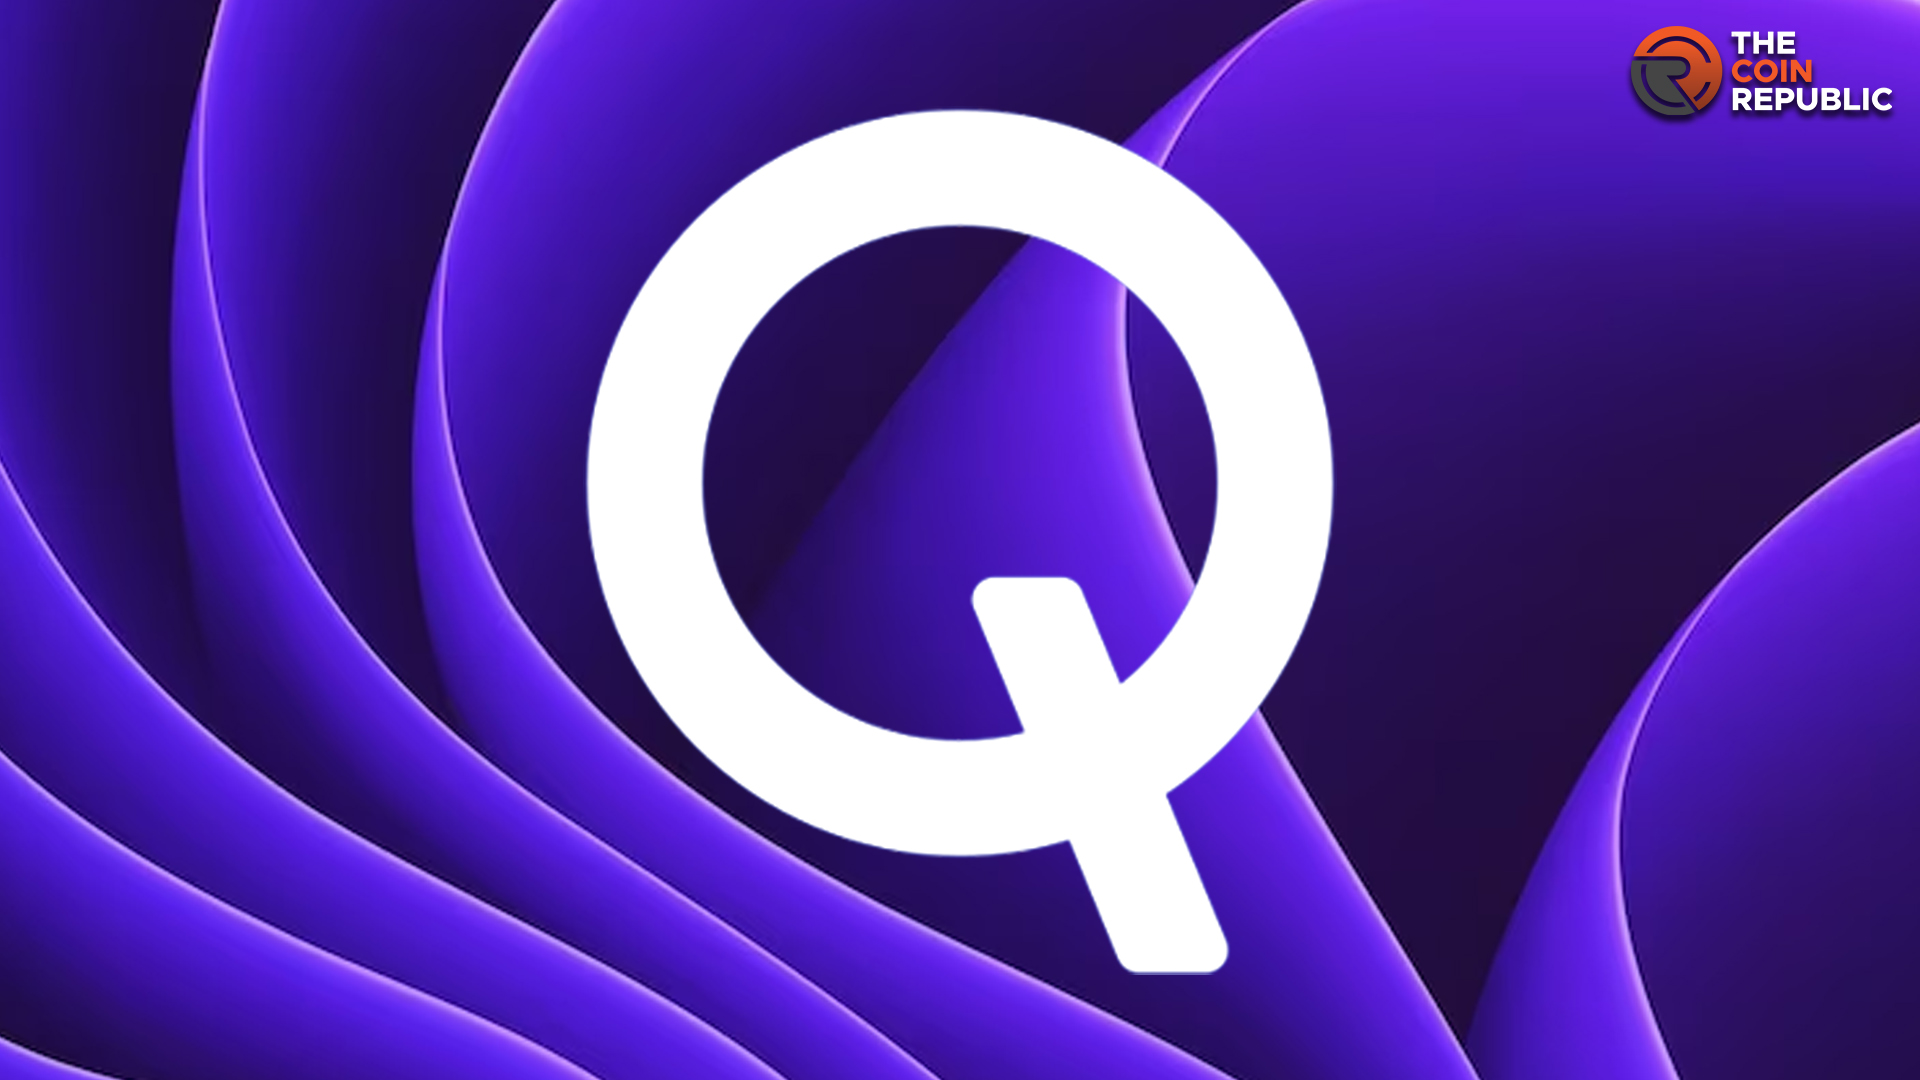 purple q logo